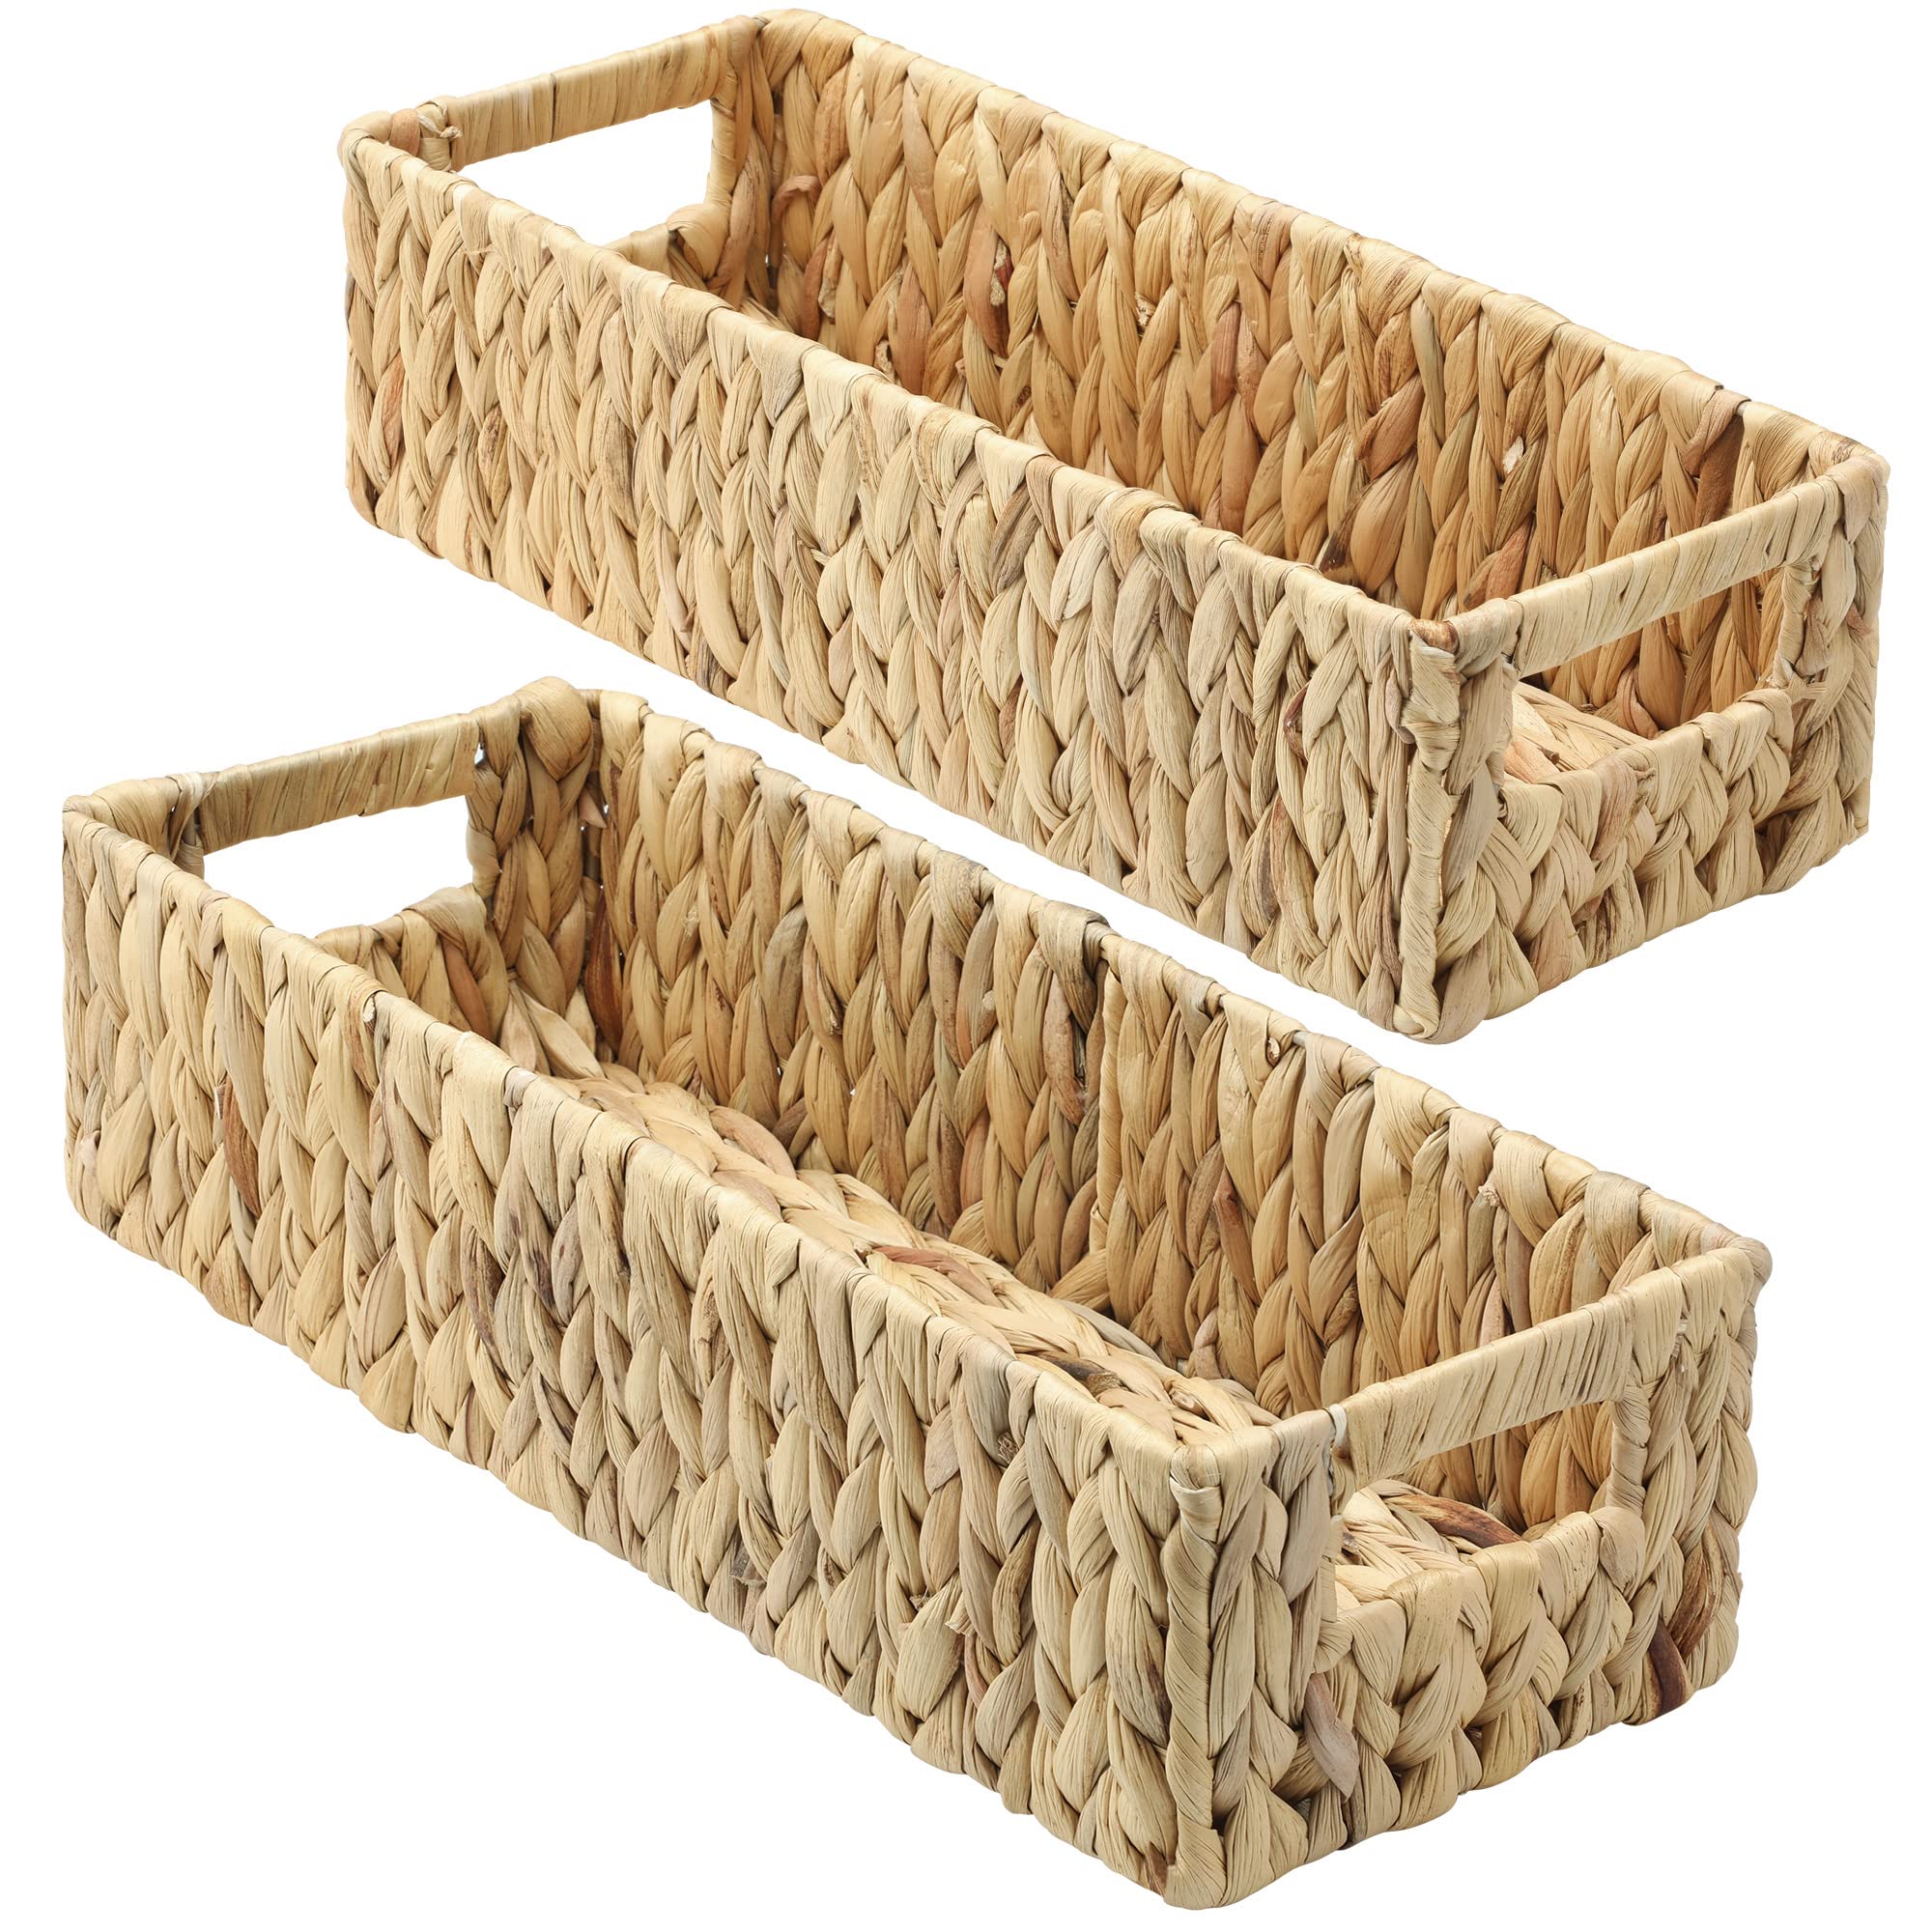 Small Wicker Baskets for Organizing Bathroom, Hyacinth Baskets Storage - 3  Pack